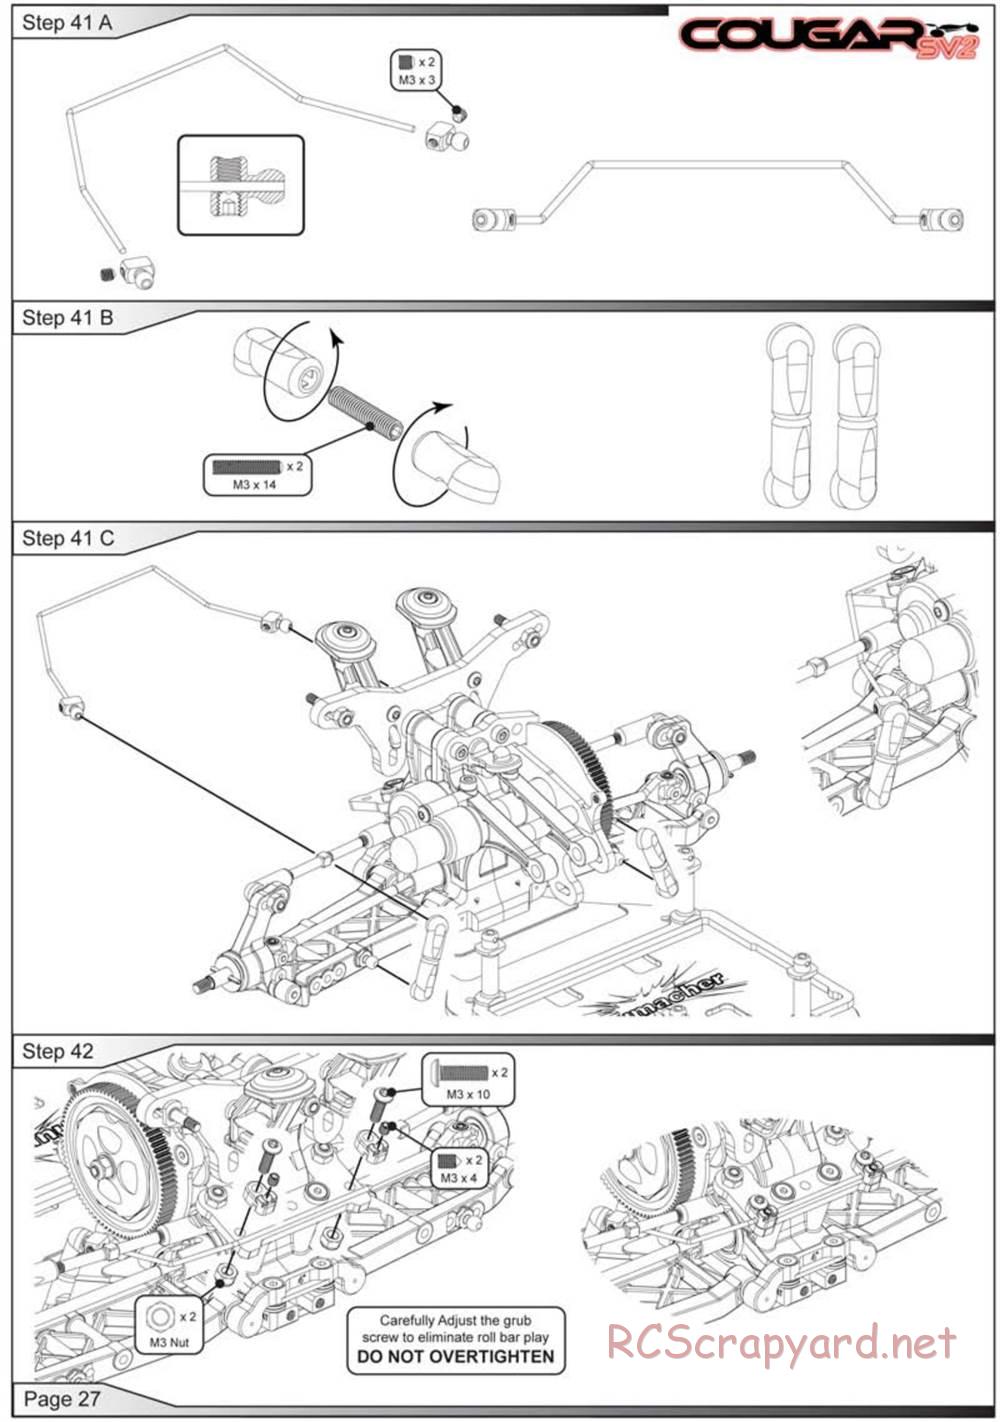 Schumacher - Cougar SV2 - Manual - Page 28